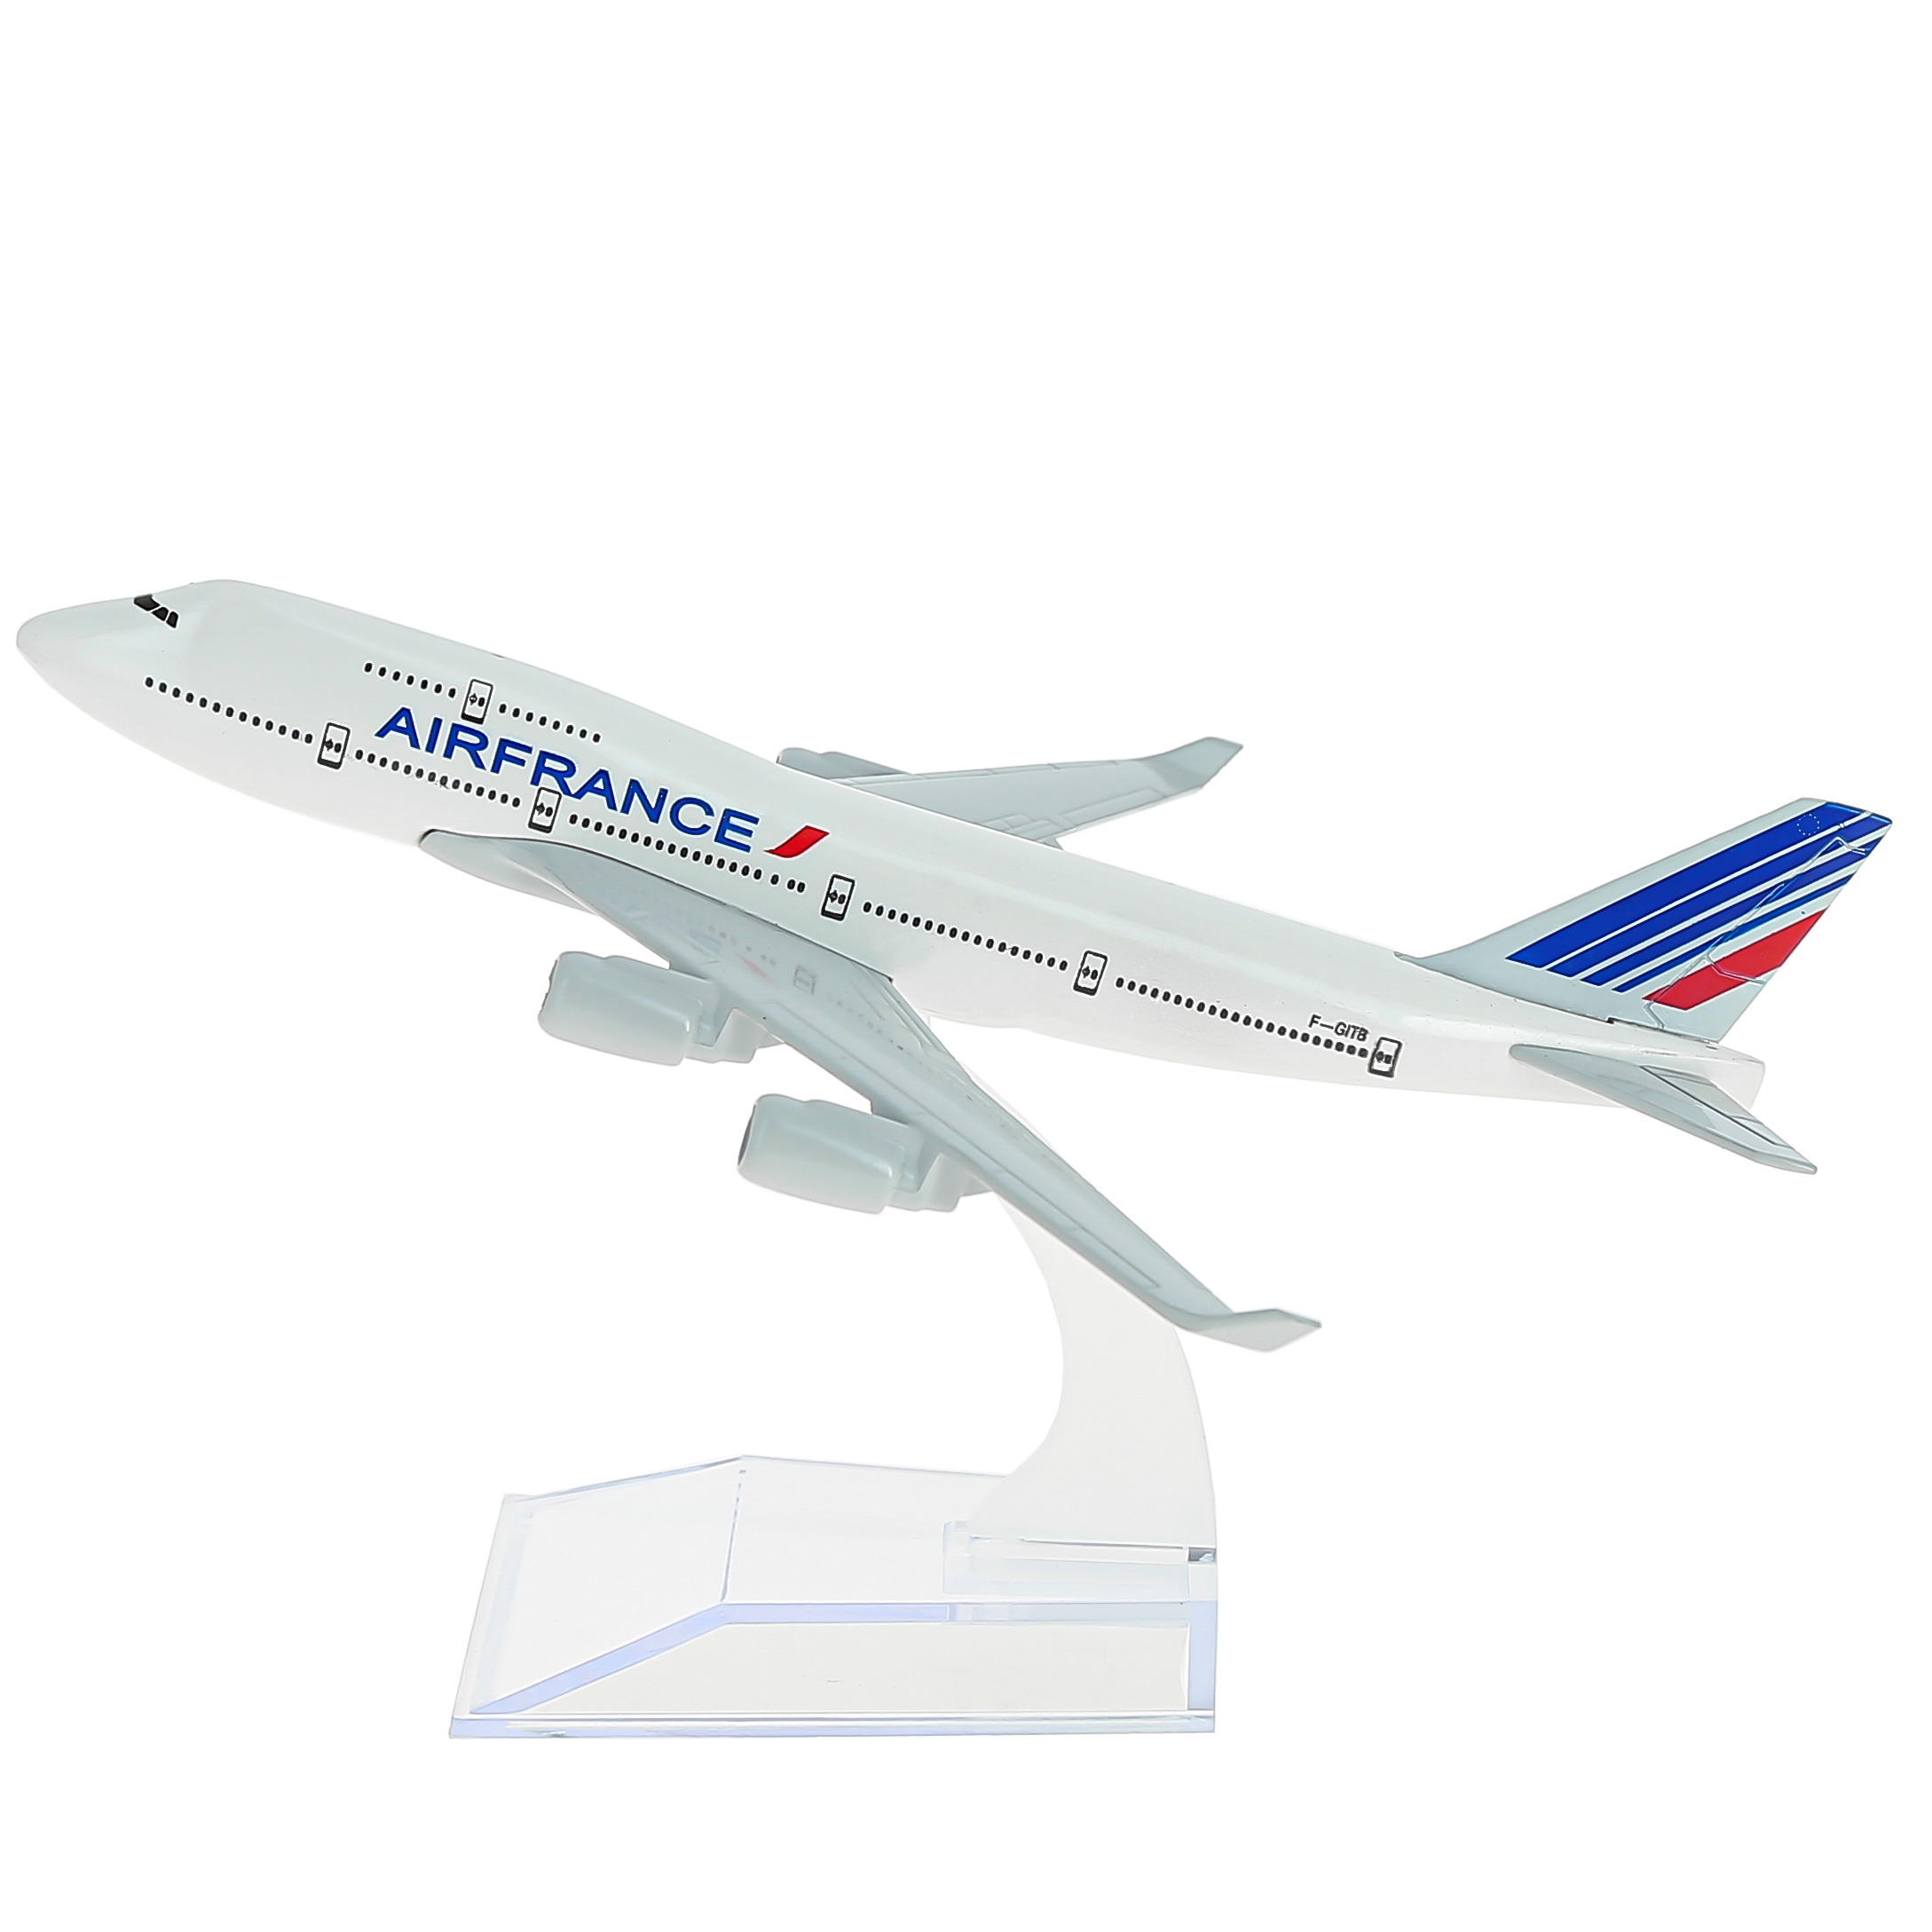     747 Air France,   16 .   ,   ,   .  # 1 hobbyplus.ru